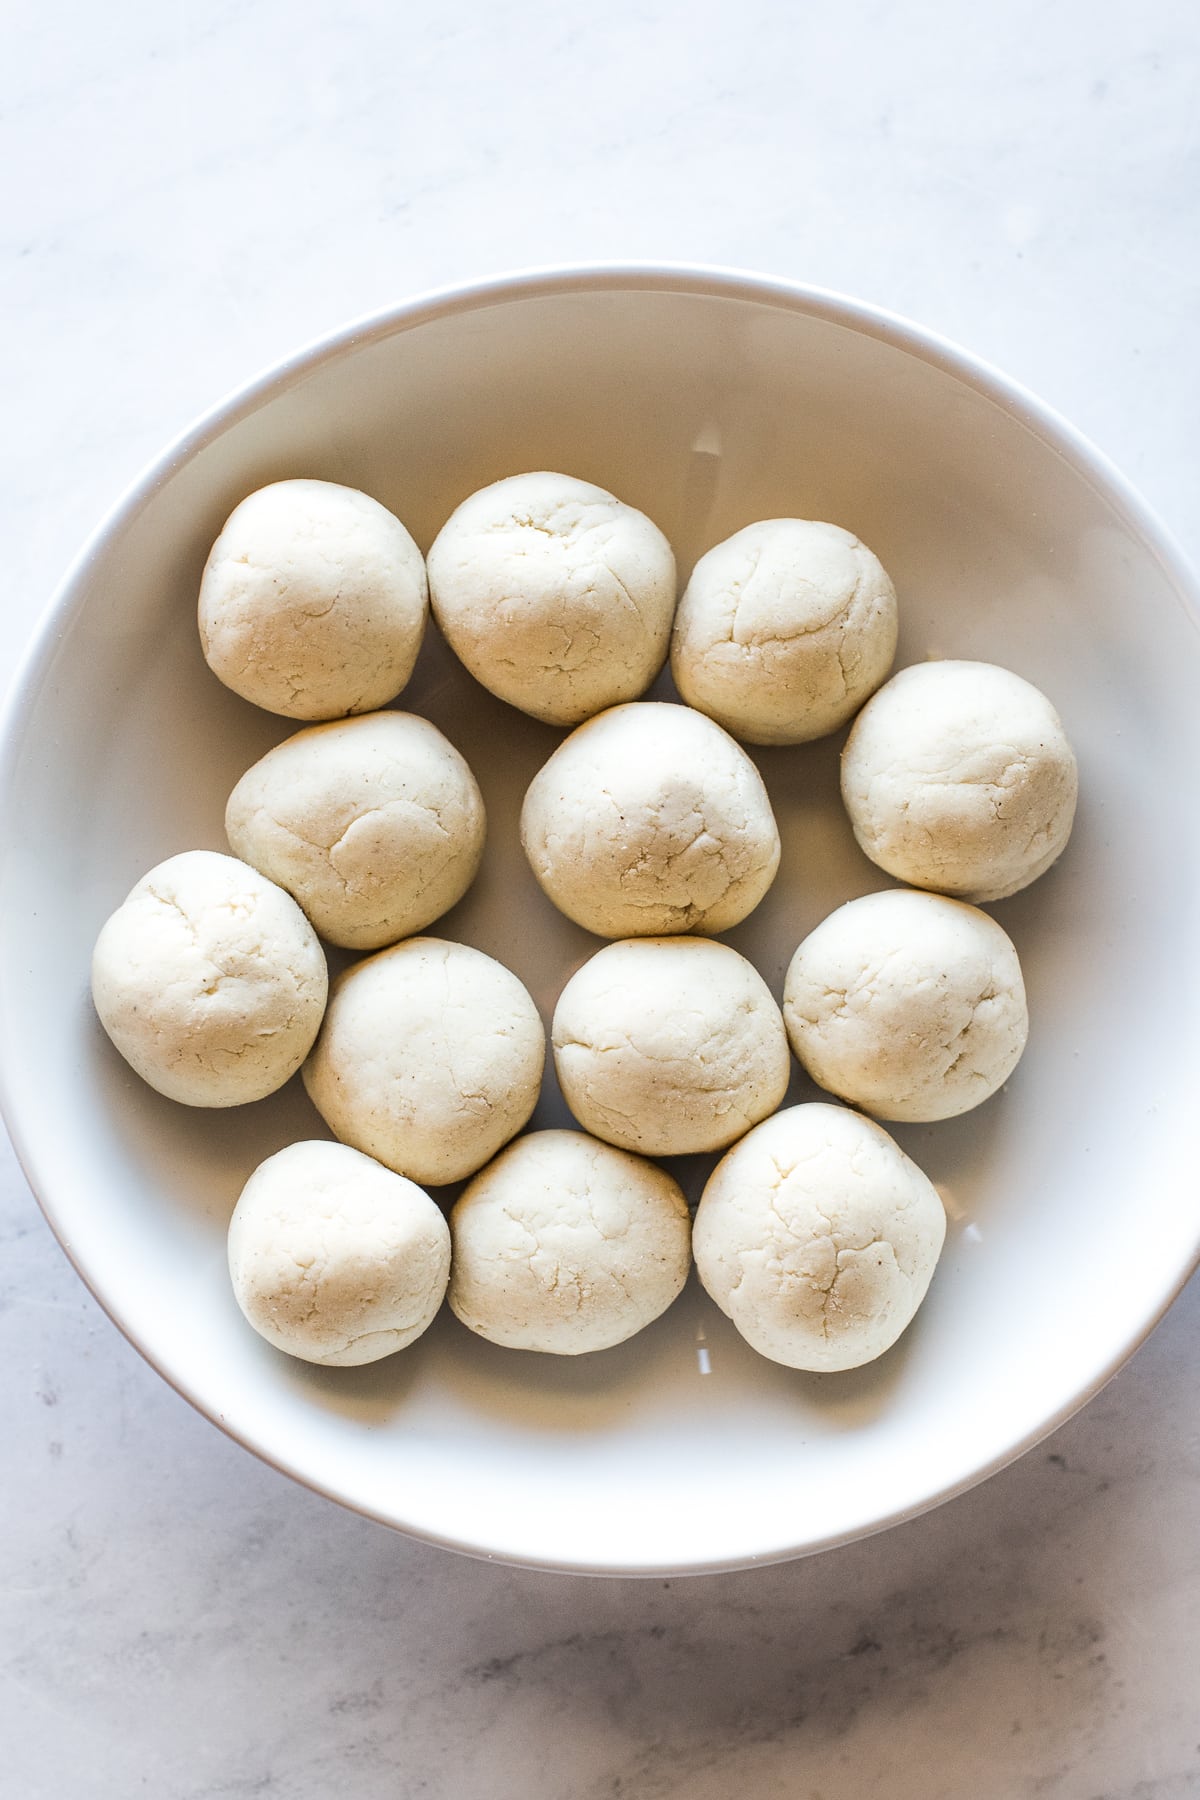 Masa harina for sopes rolled into balls.